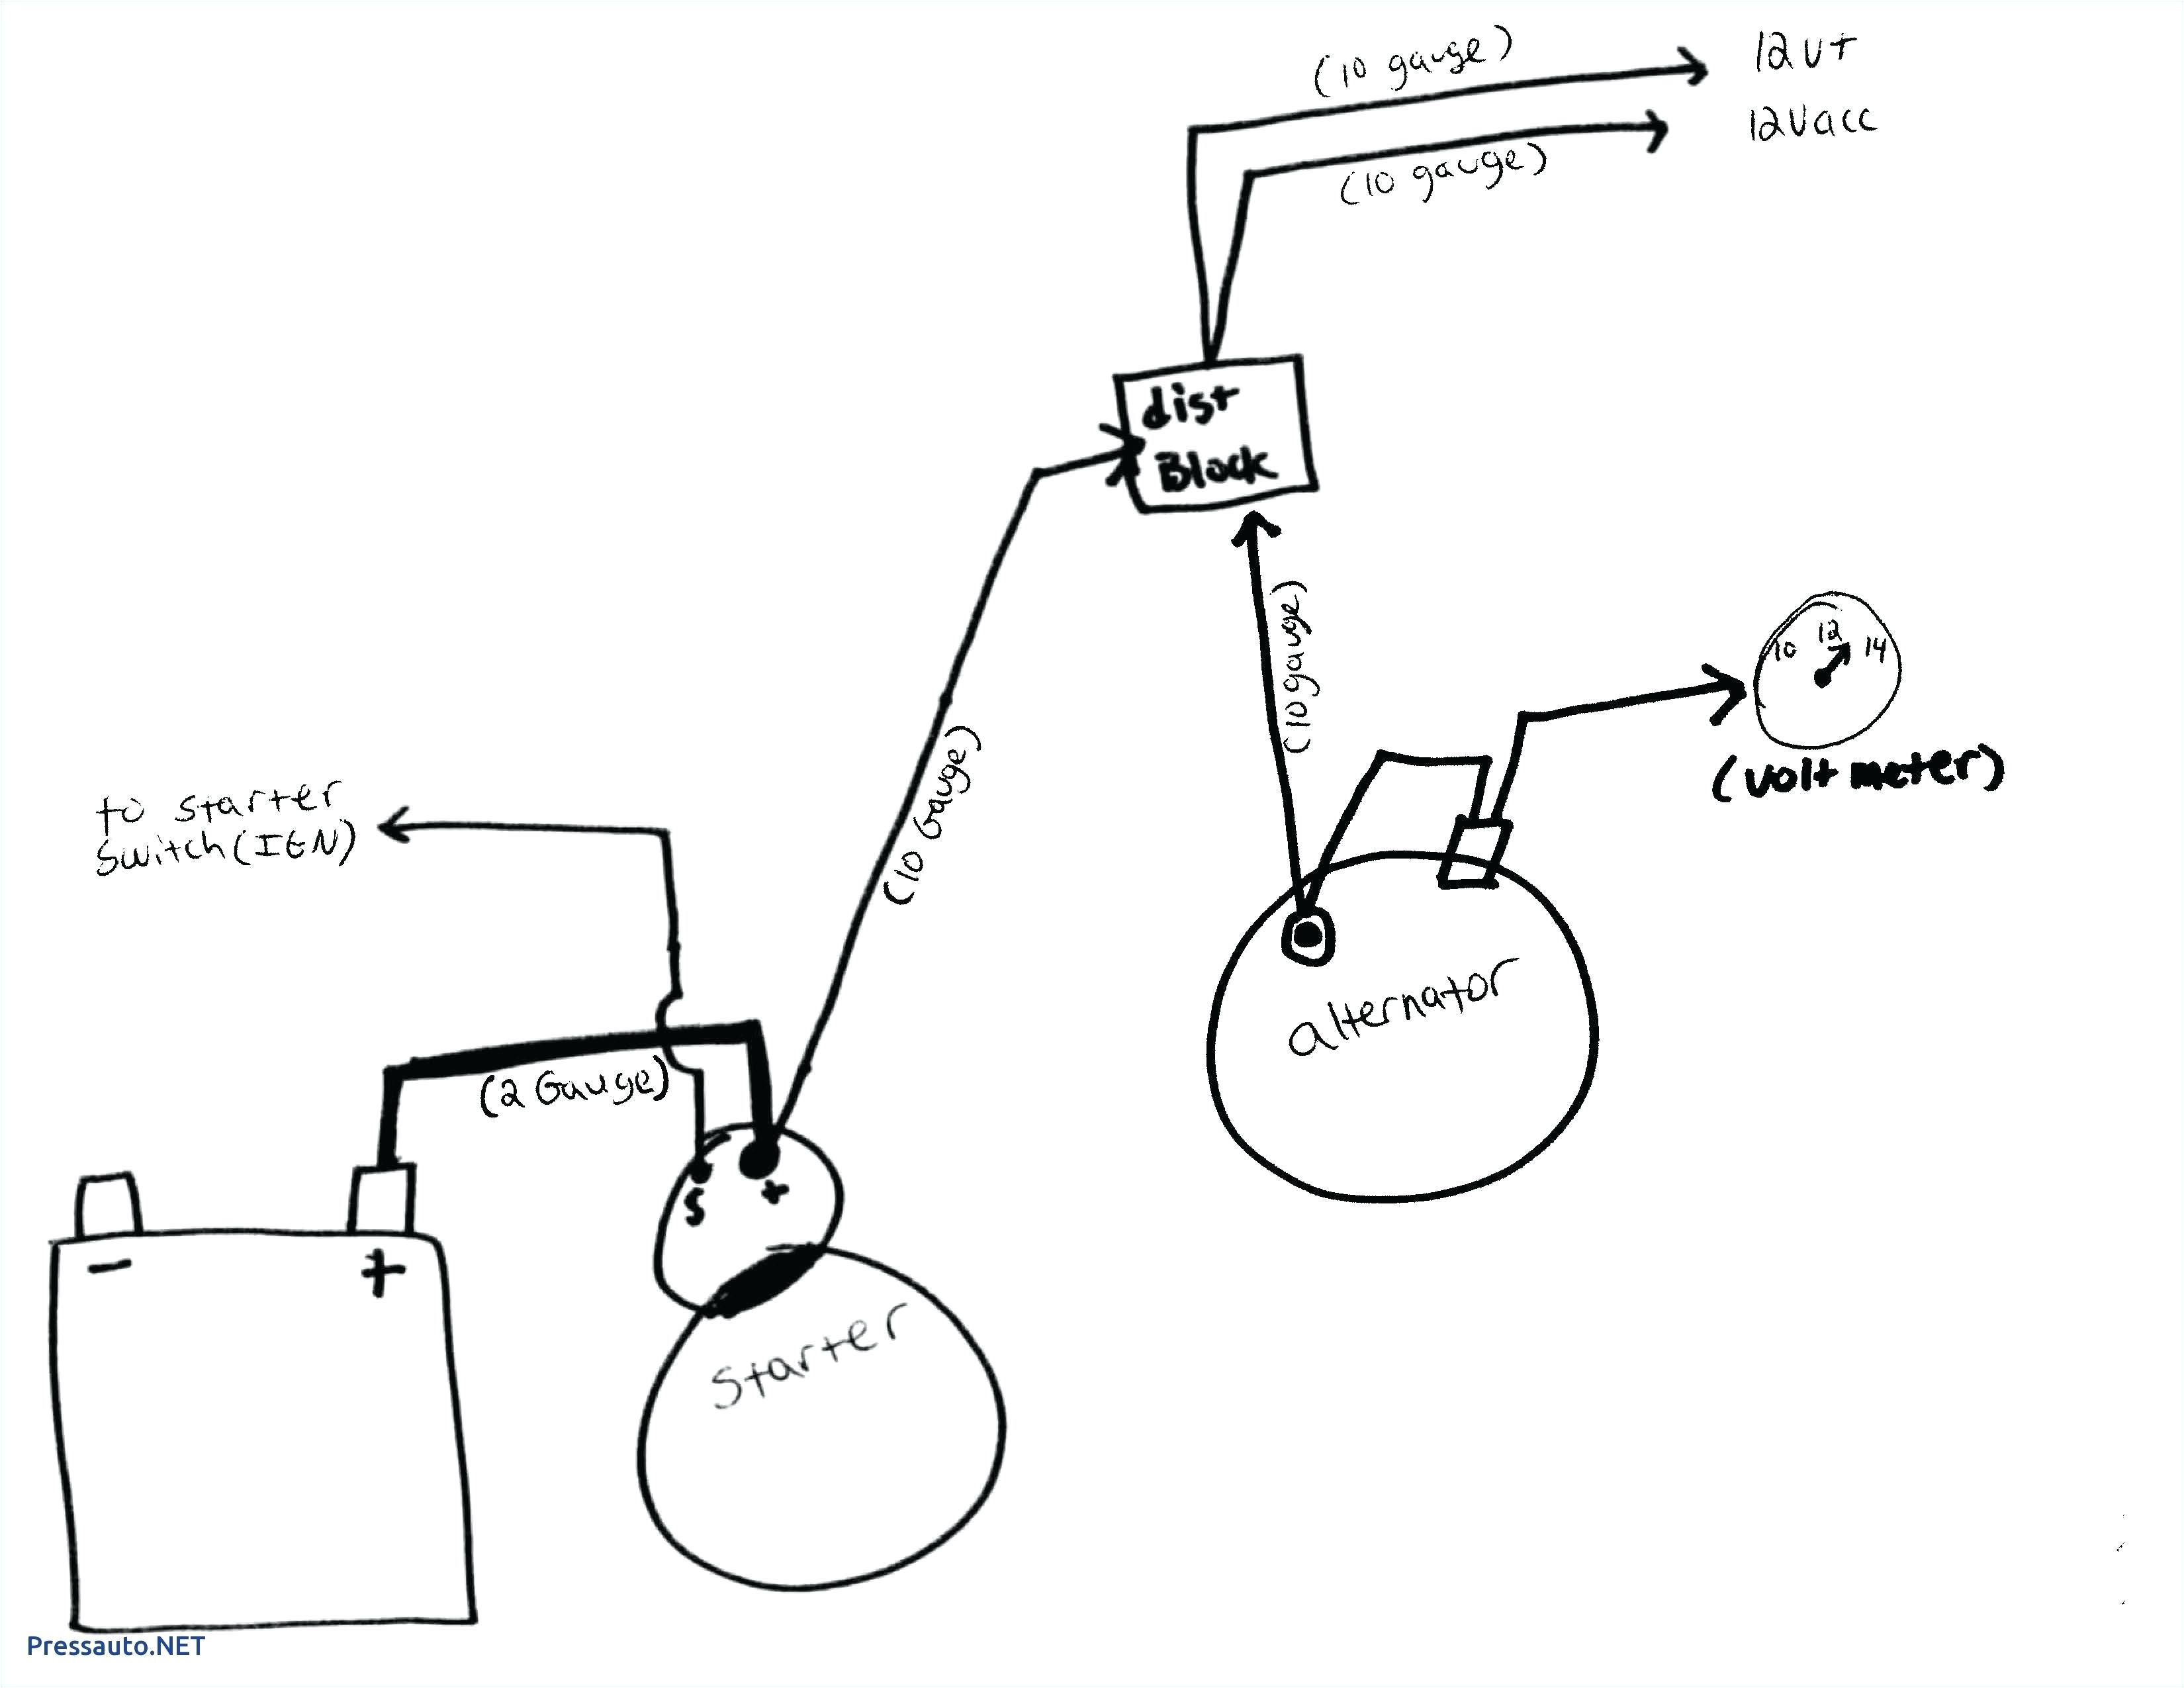 ln106 alternator wiring diagram wiring diagram database bloghilux alternator wiring diagram wiring diagram guide for dummies